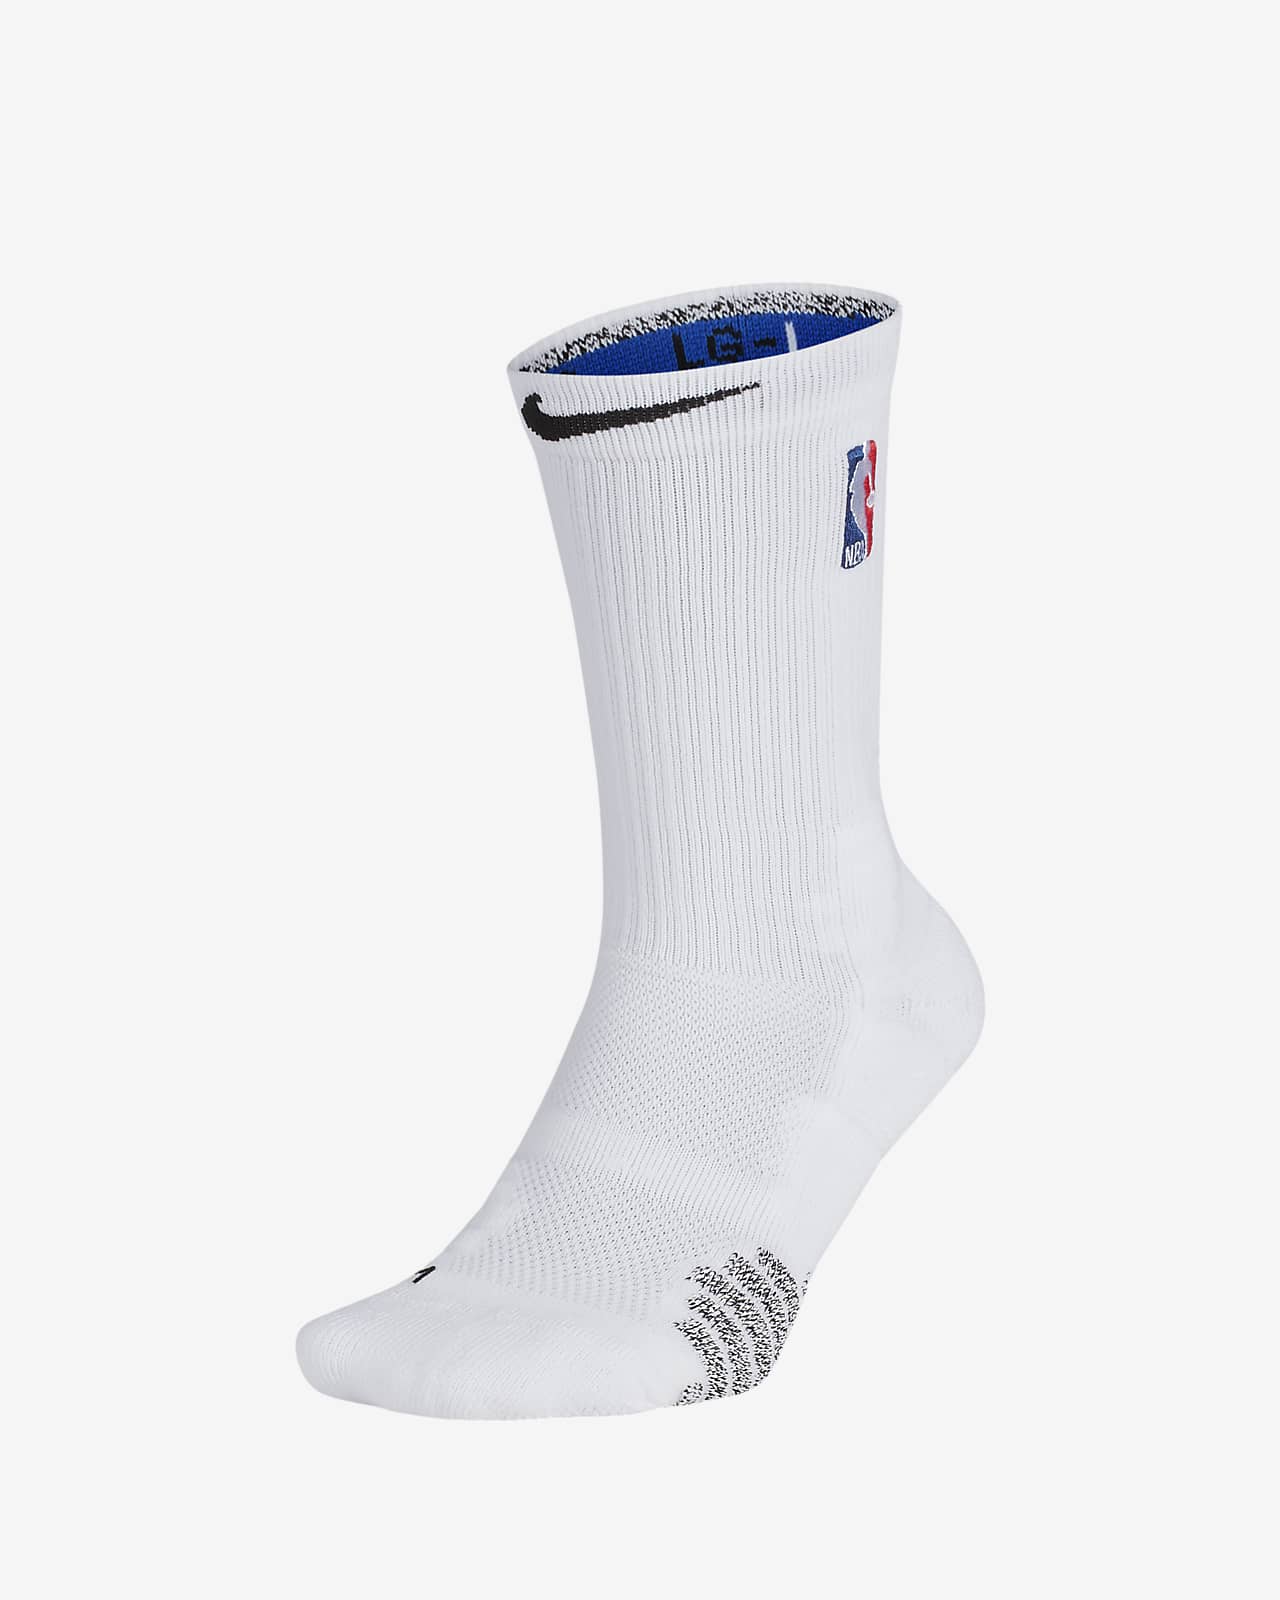 Nike and NBA present new socks